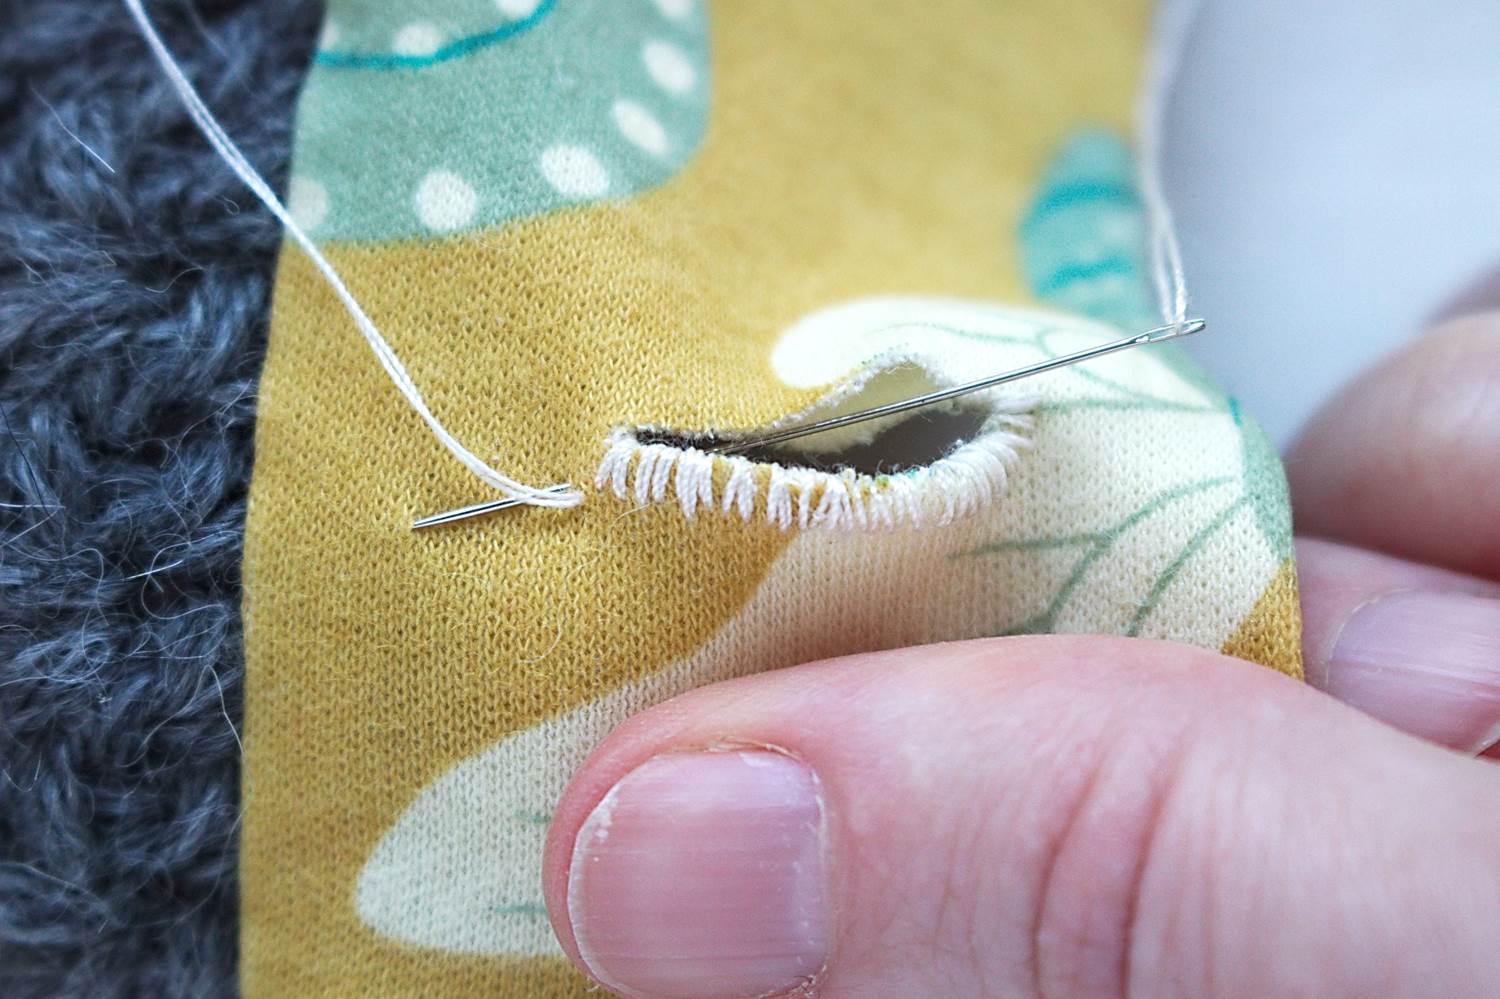 TUTORIAL How to make a scrap fabric and yarn neckwarmer — Emmy + LIEN